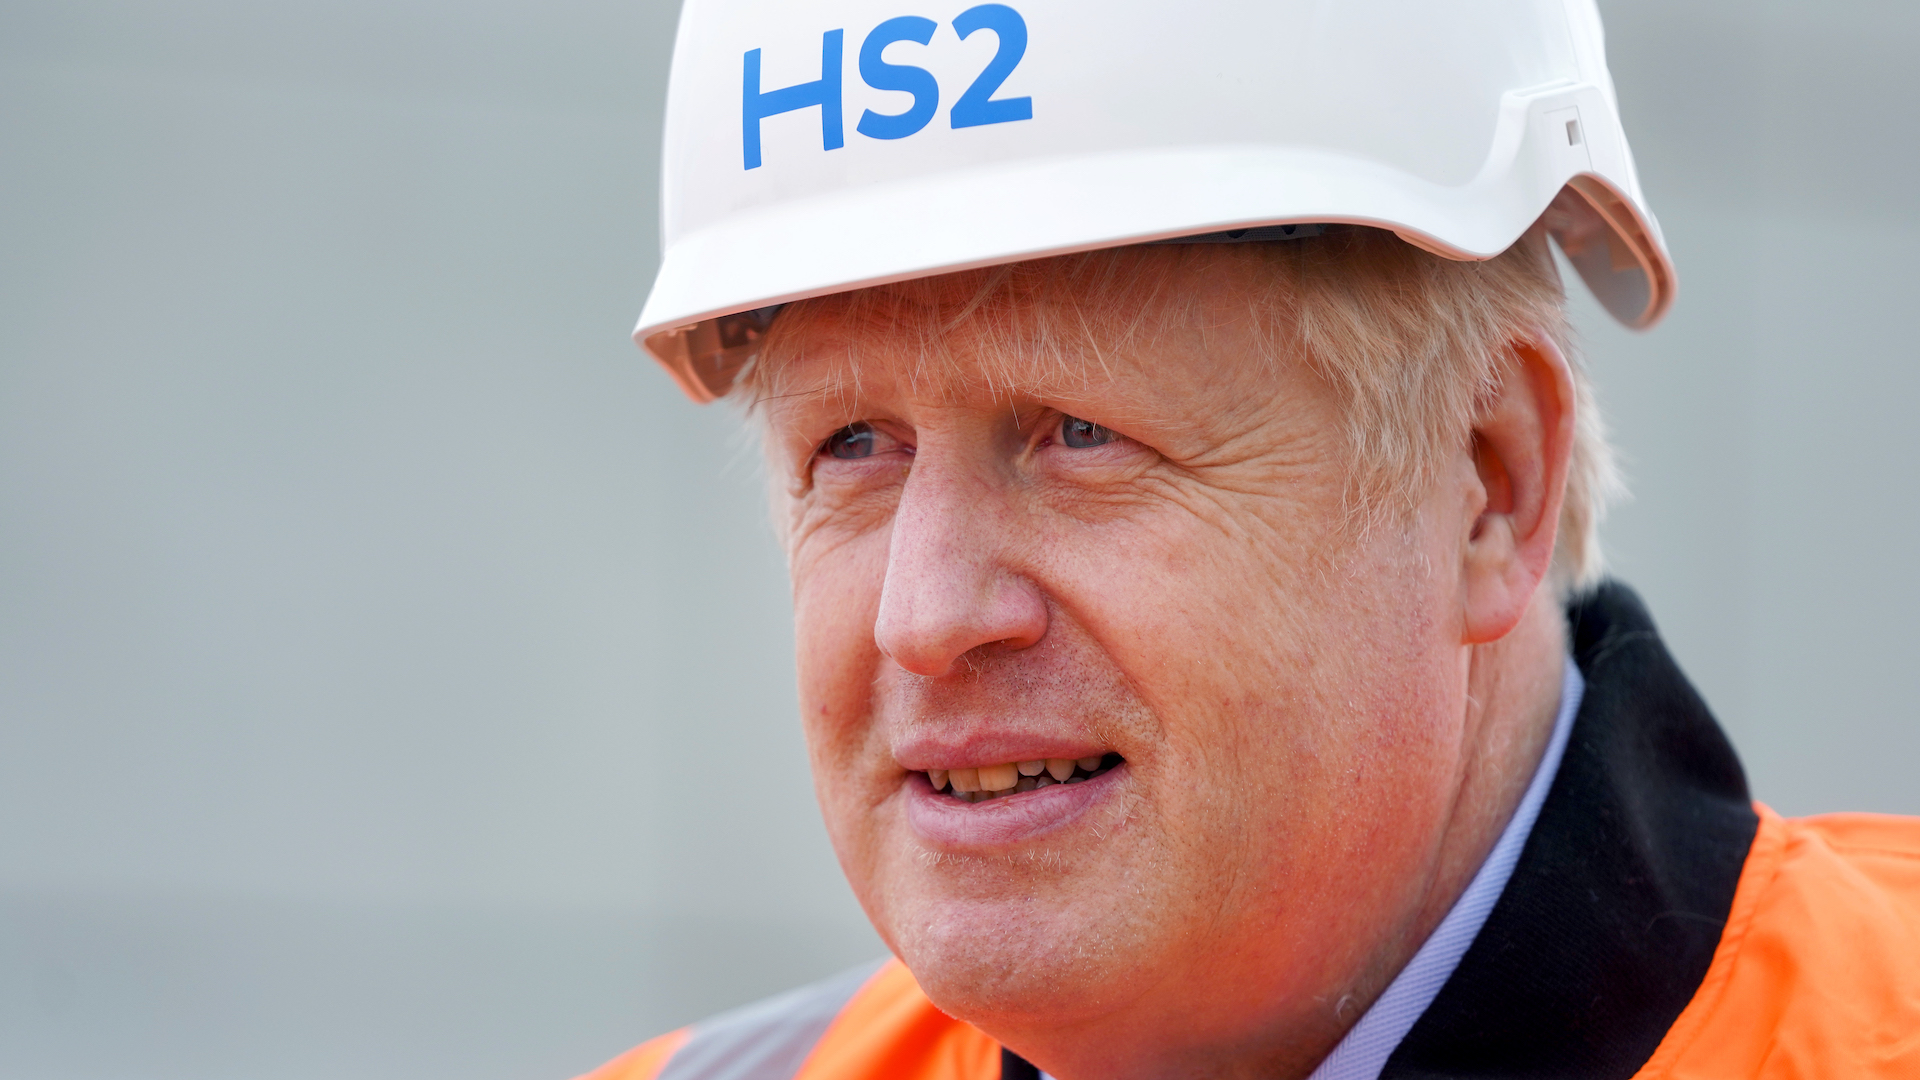 Prime minister Boris Johnson in an orange high vis jacket and a HS2 helmet